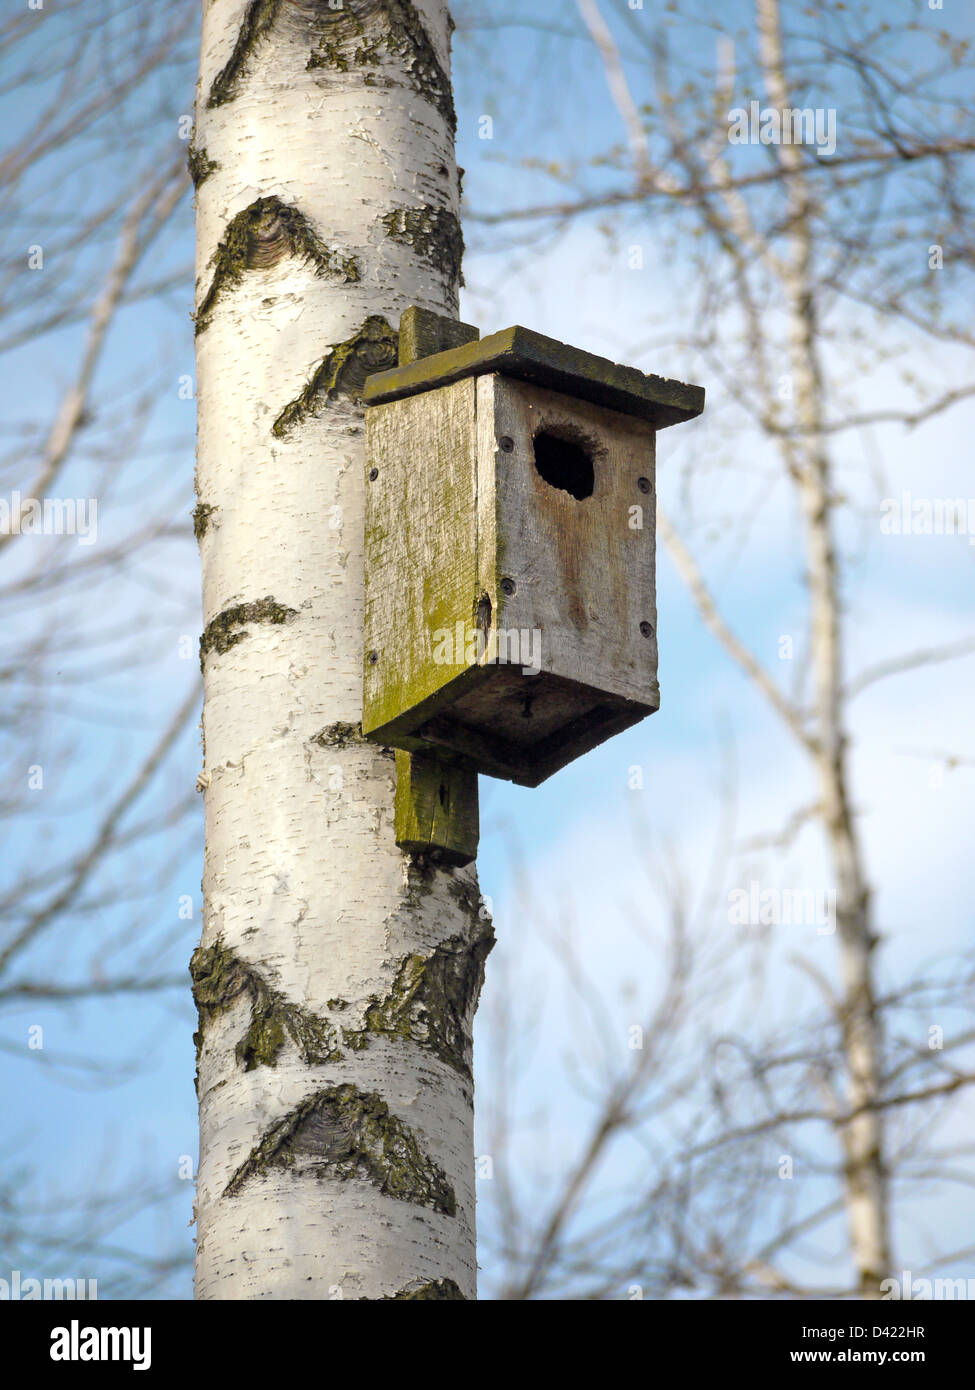 Wooden bird feeder affixed to birch tree Stock Photo